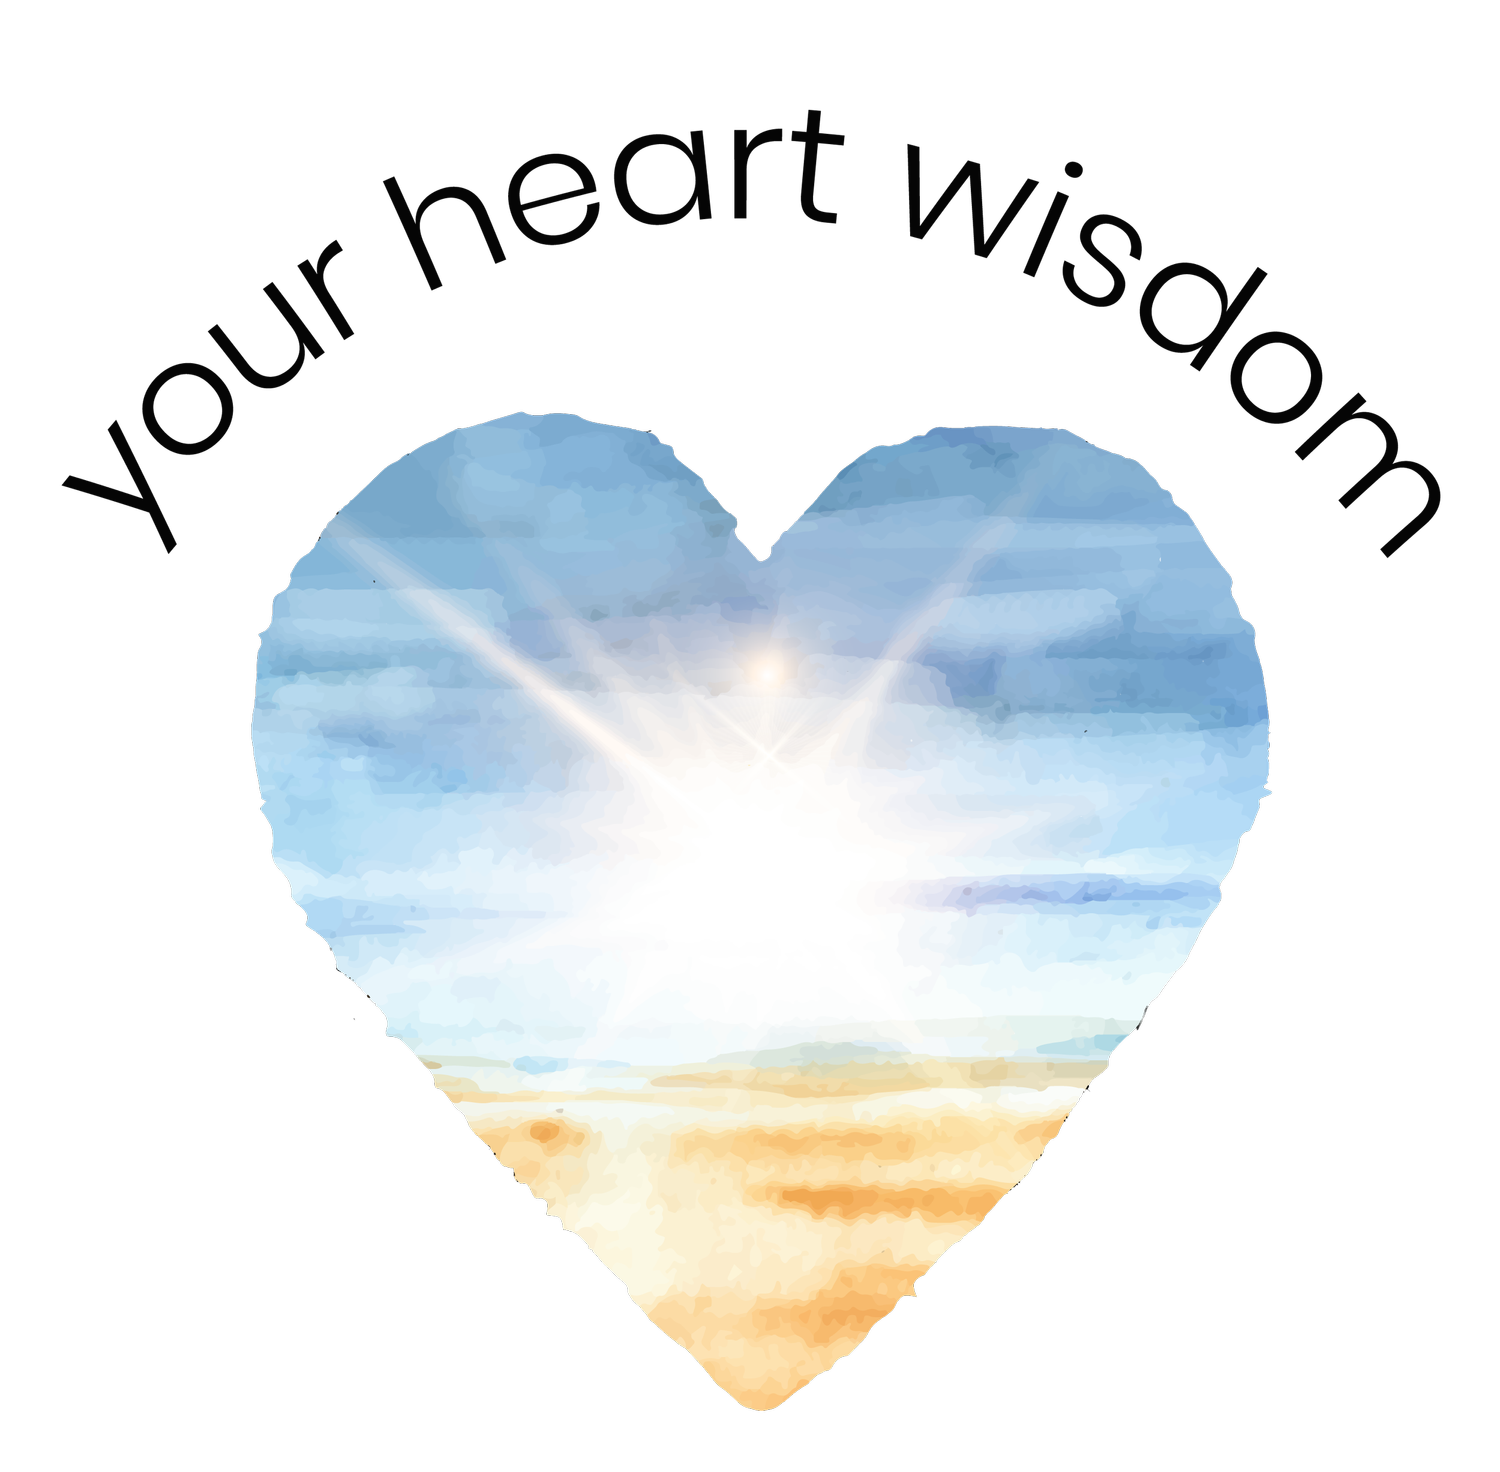 Your Heart Wisdom